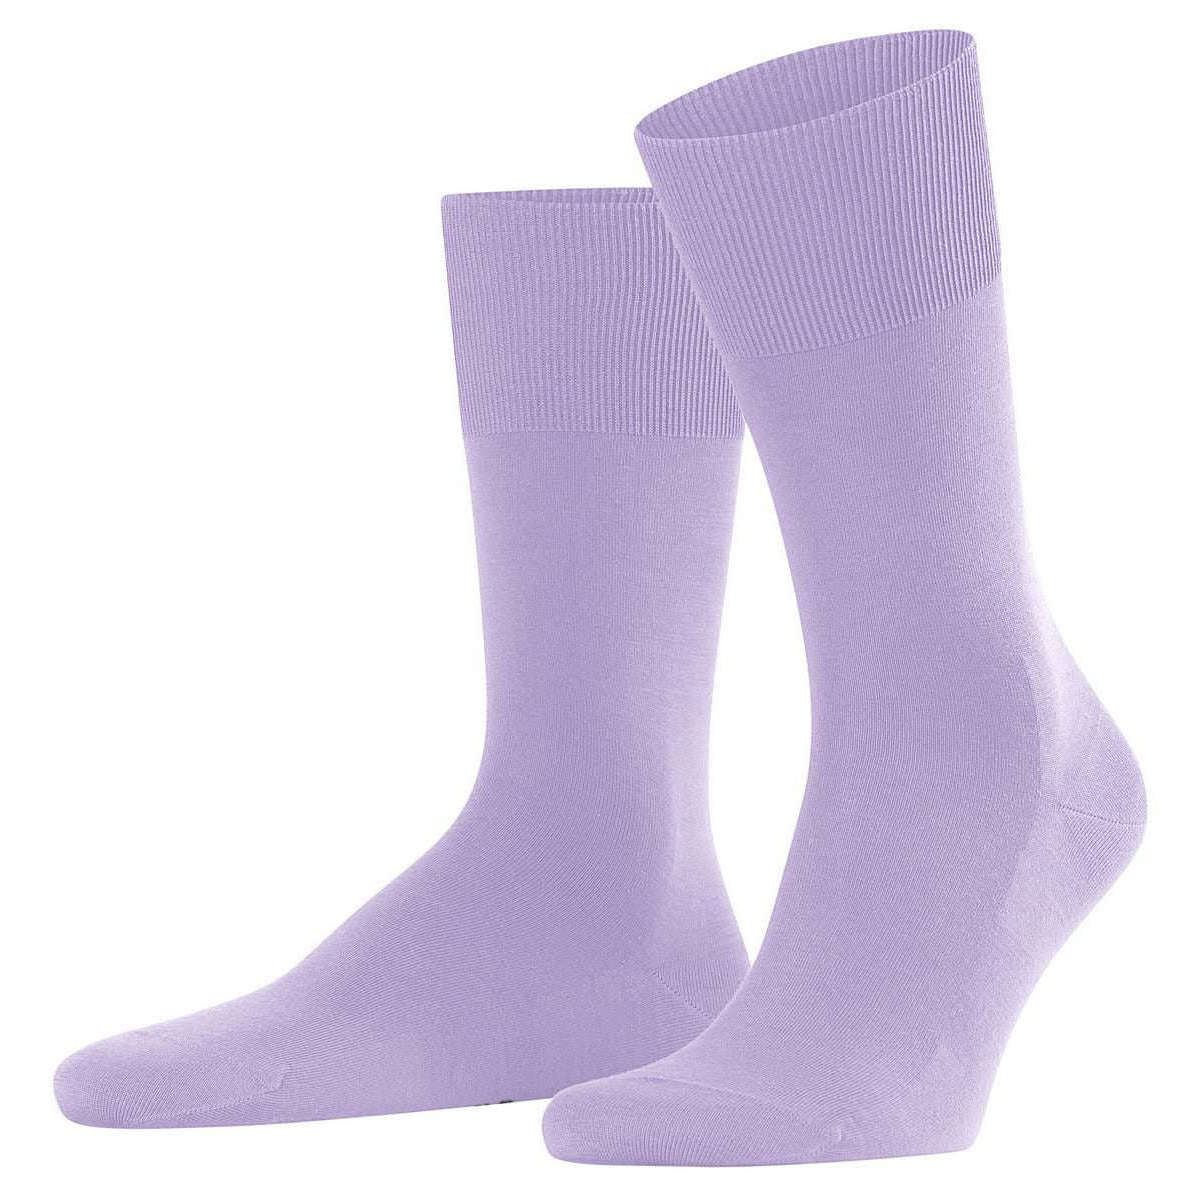 Falke Climawool Socks - Lupine Lilac